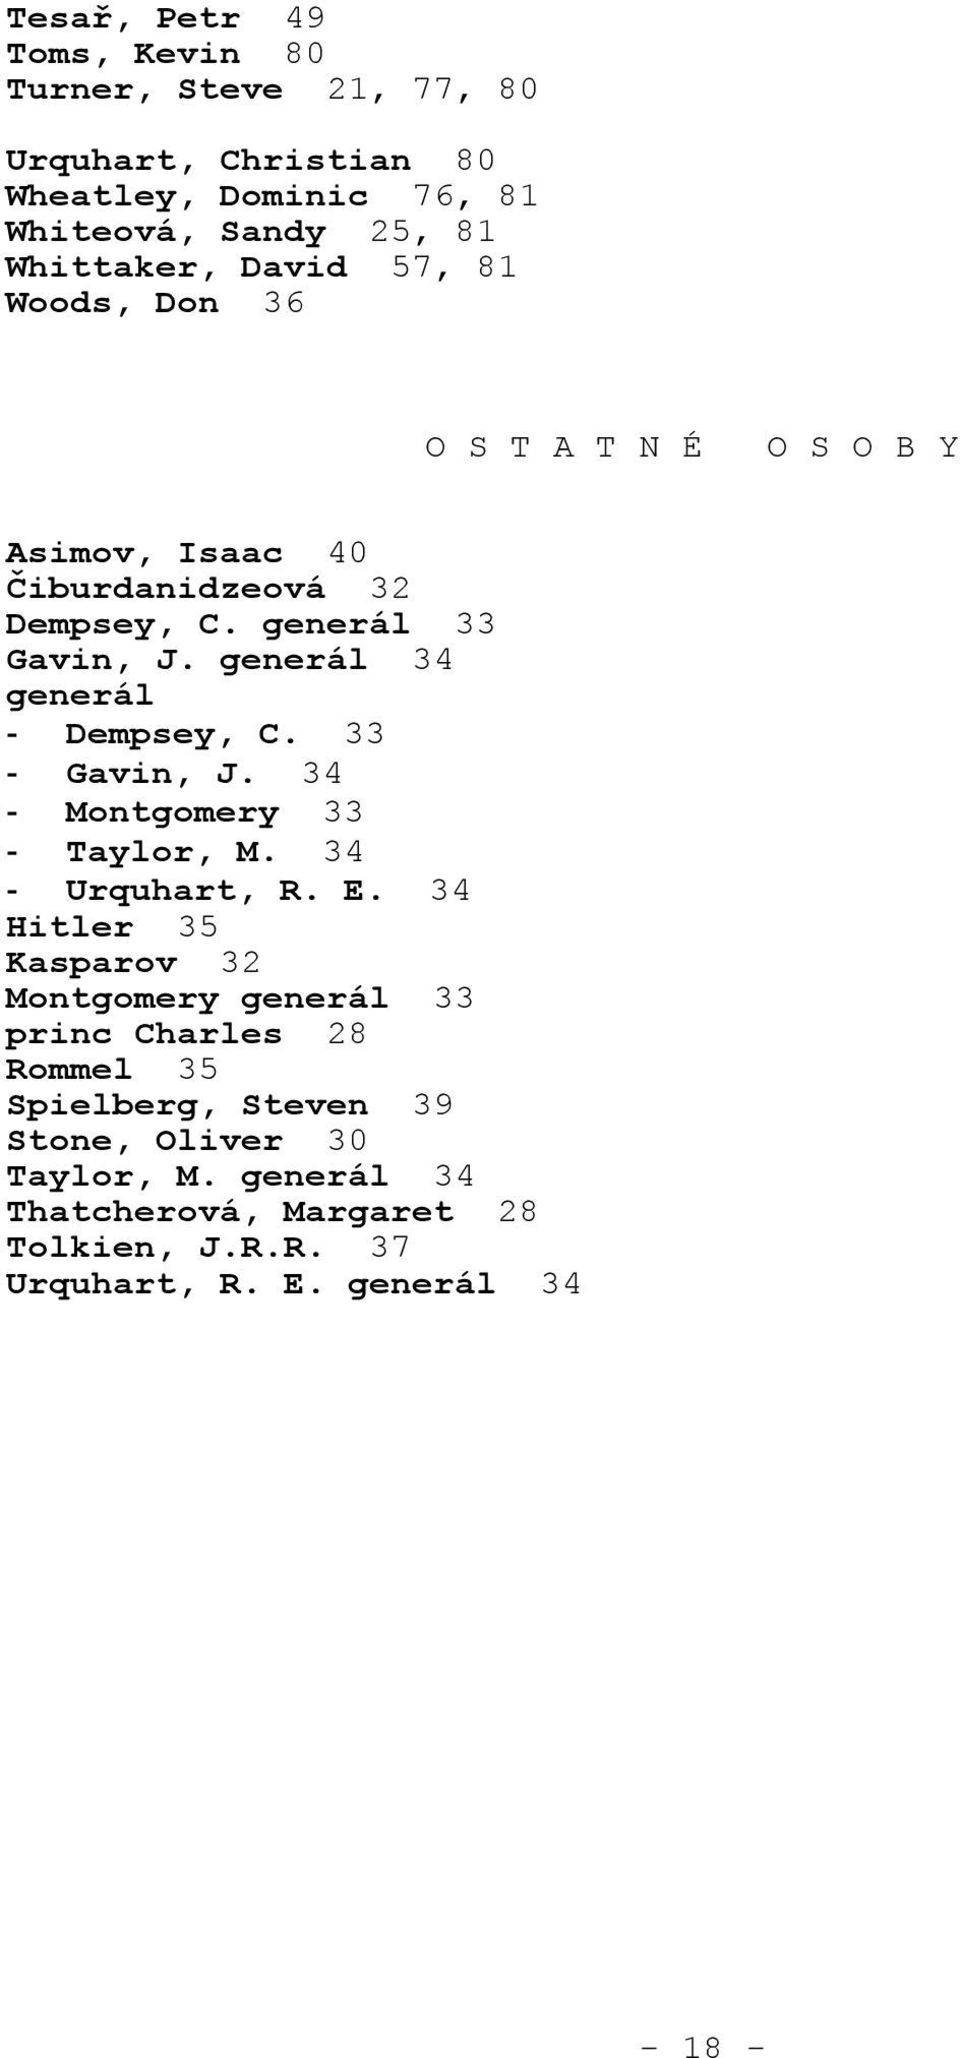 generál 34 generál - Dempsey, C. 33 - Gavin, J. 34 - Montgomery 33 - Taylor, M. 34 - Urquhart, R. E.